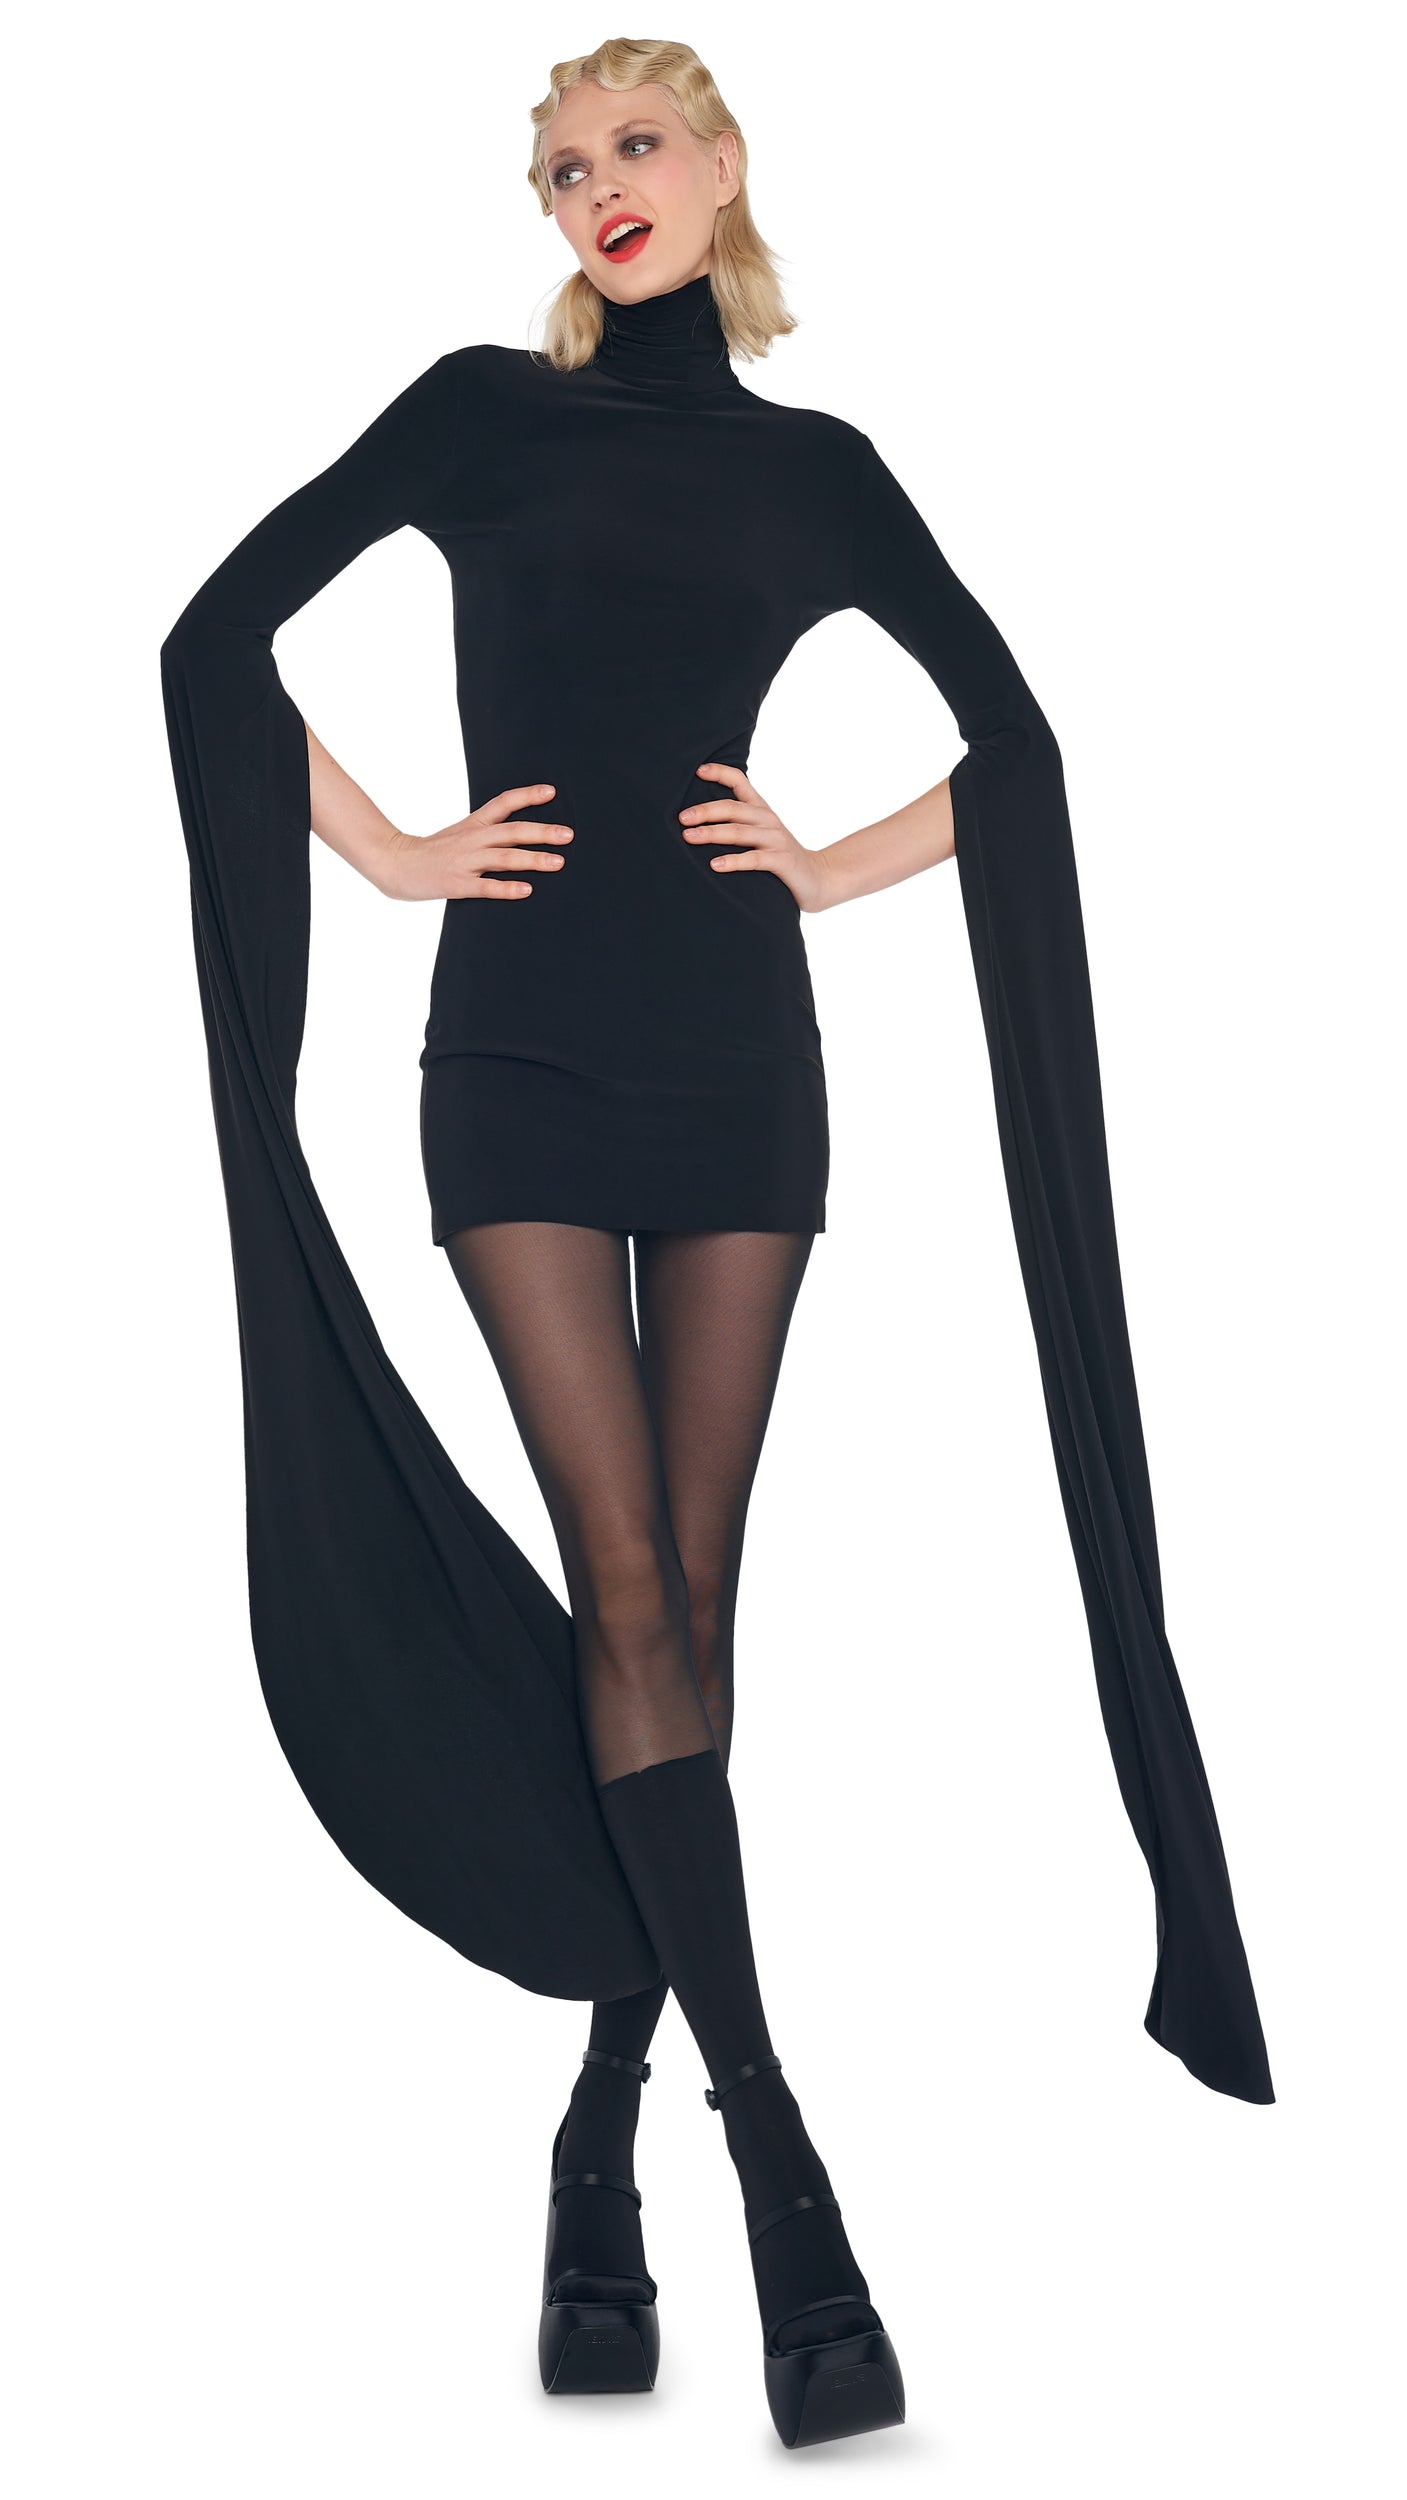 Long Sleeve Turtleneck Mini Dress Black